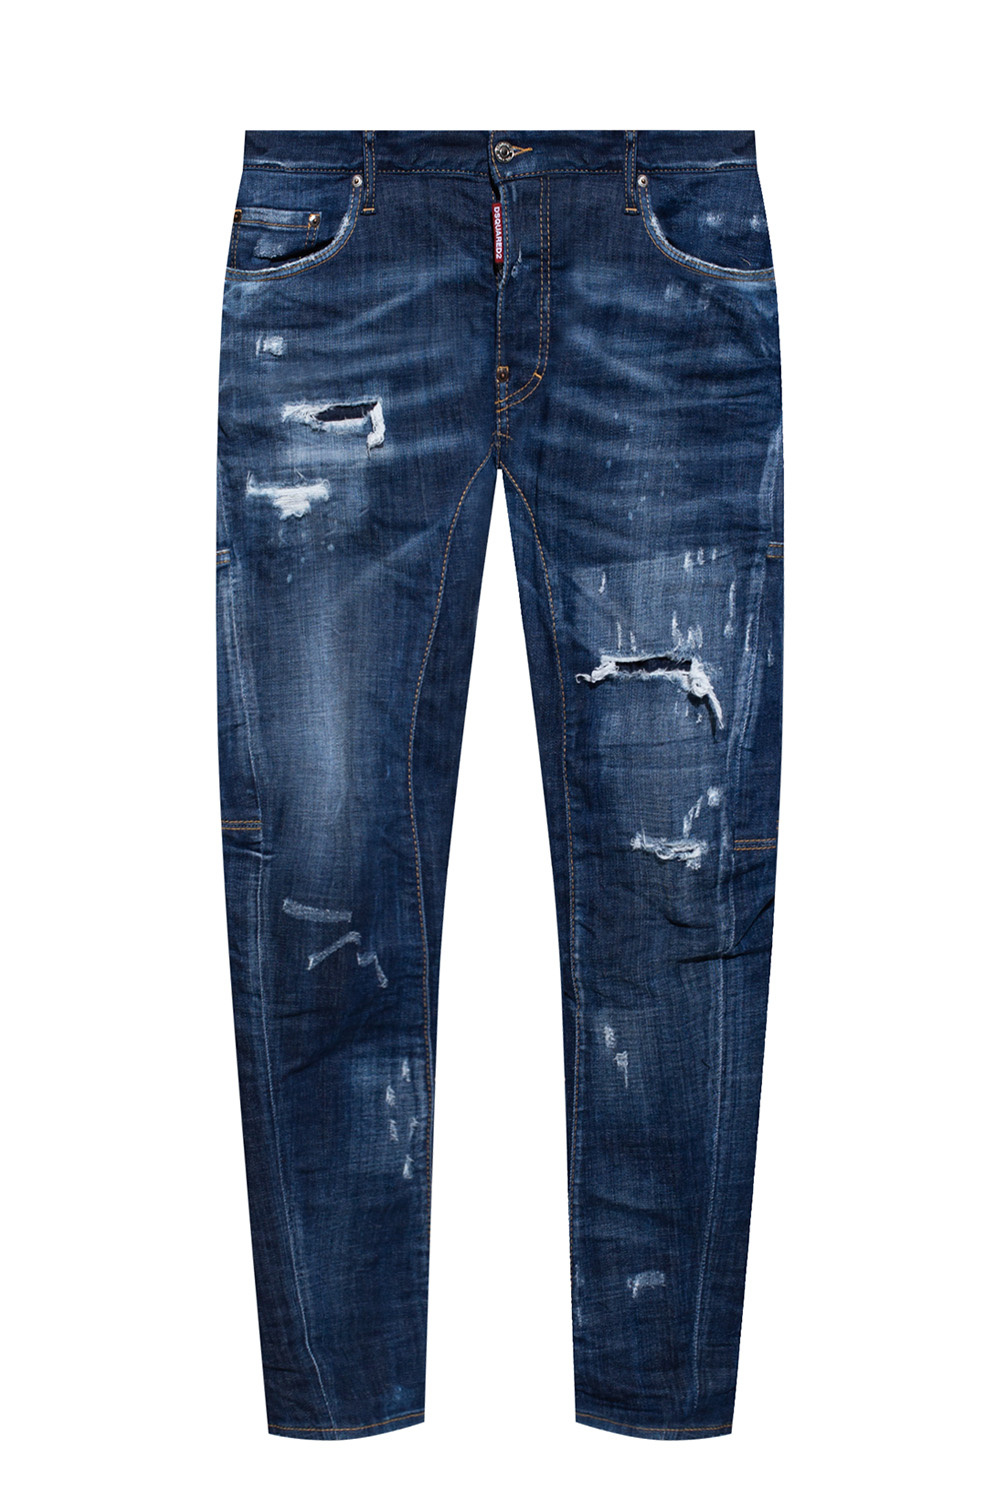 Dsquared2 'Tidy Biker' jeans | Men's Clothing | IetpShops 